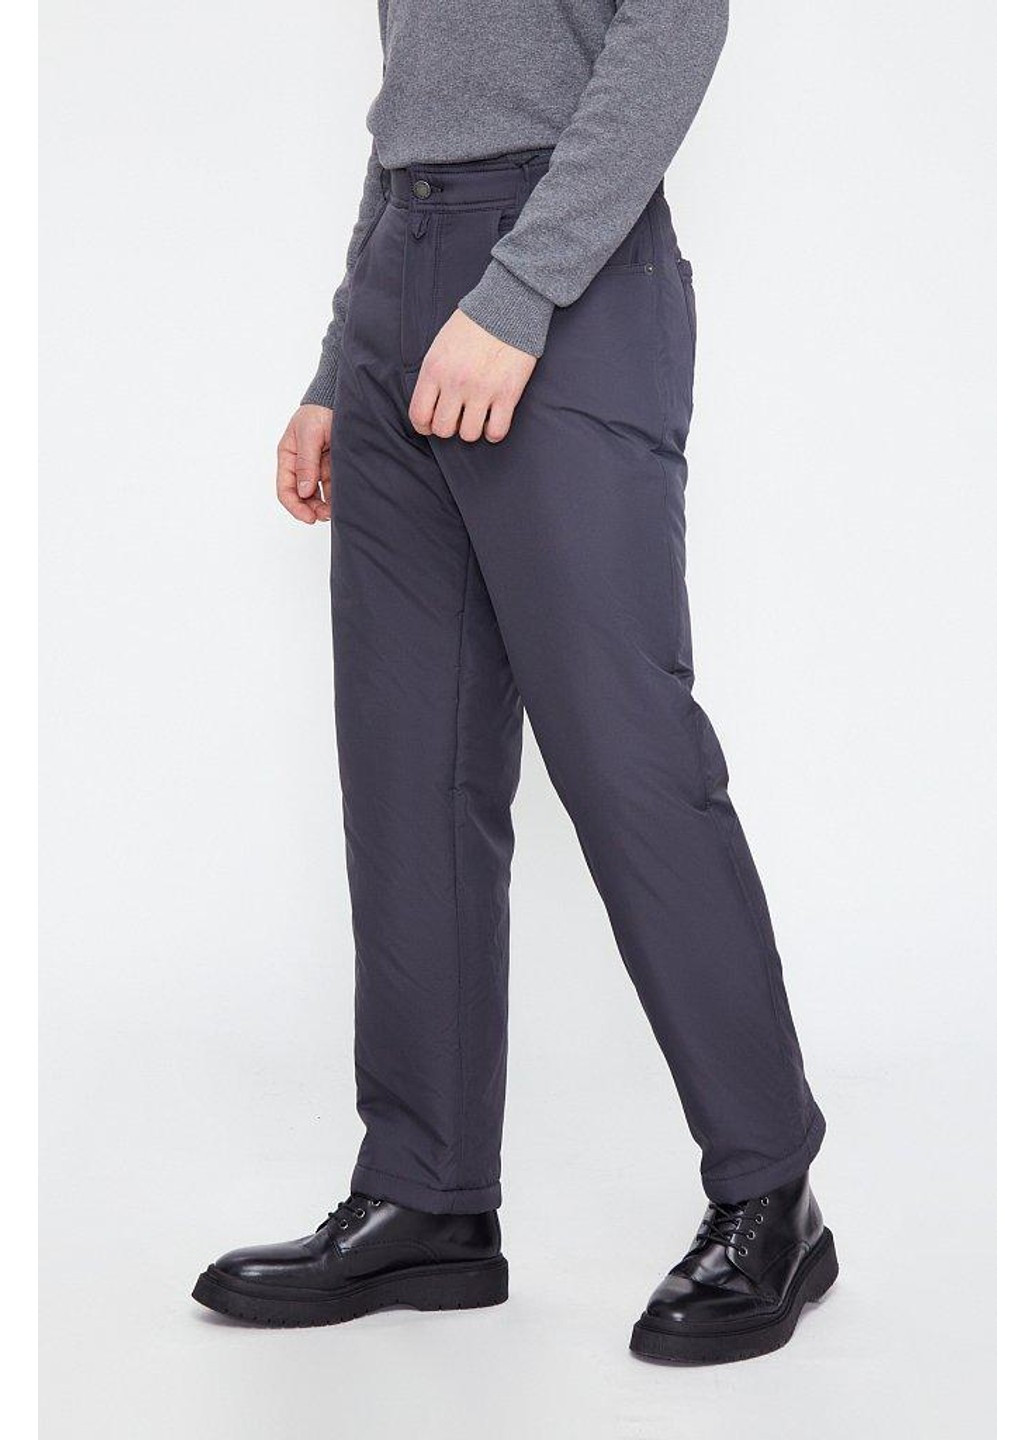 Темно-серые кэжуал зимние зауженные брюки Finn Flare